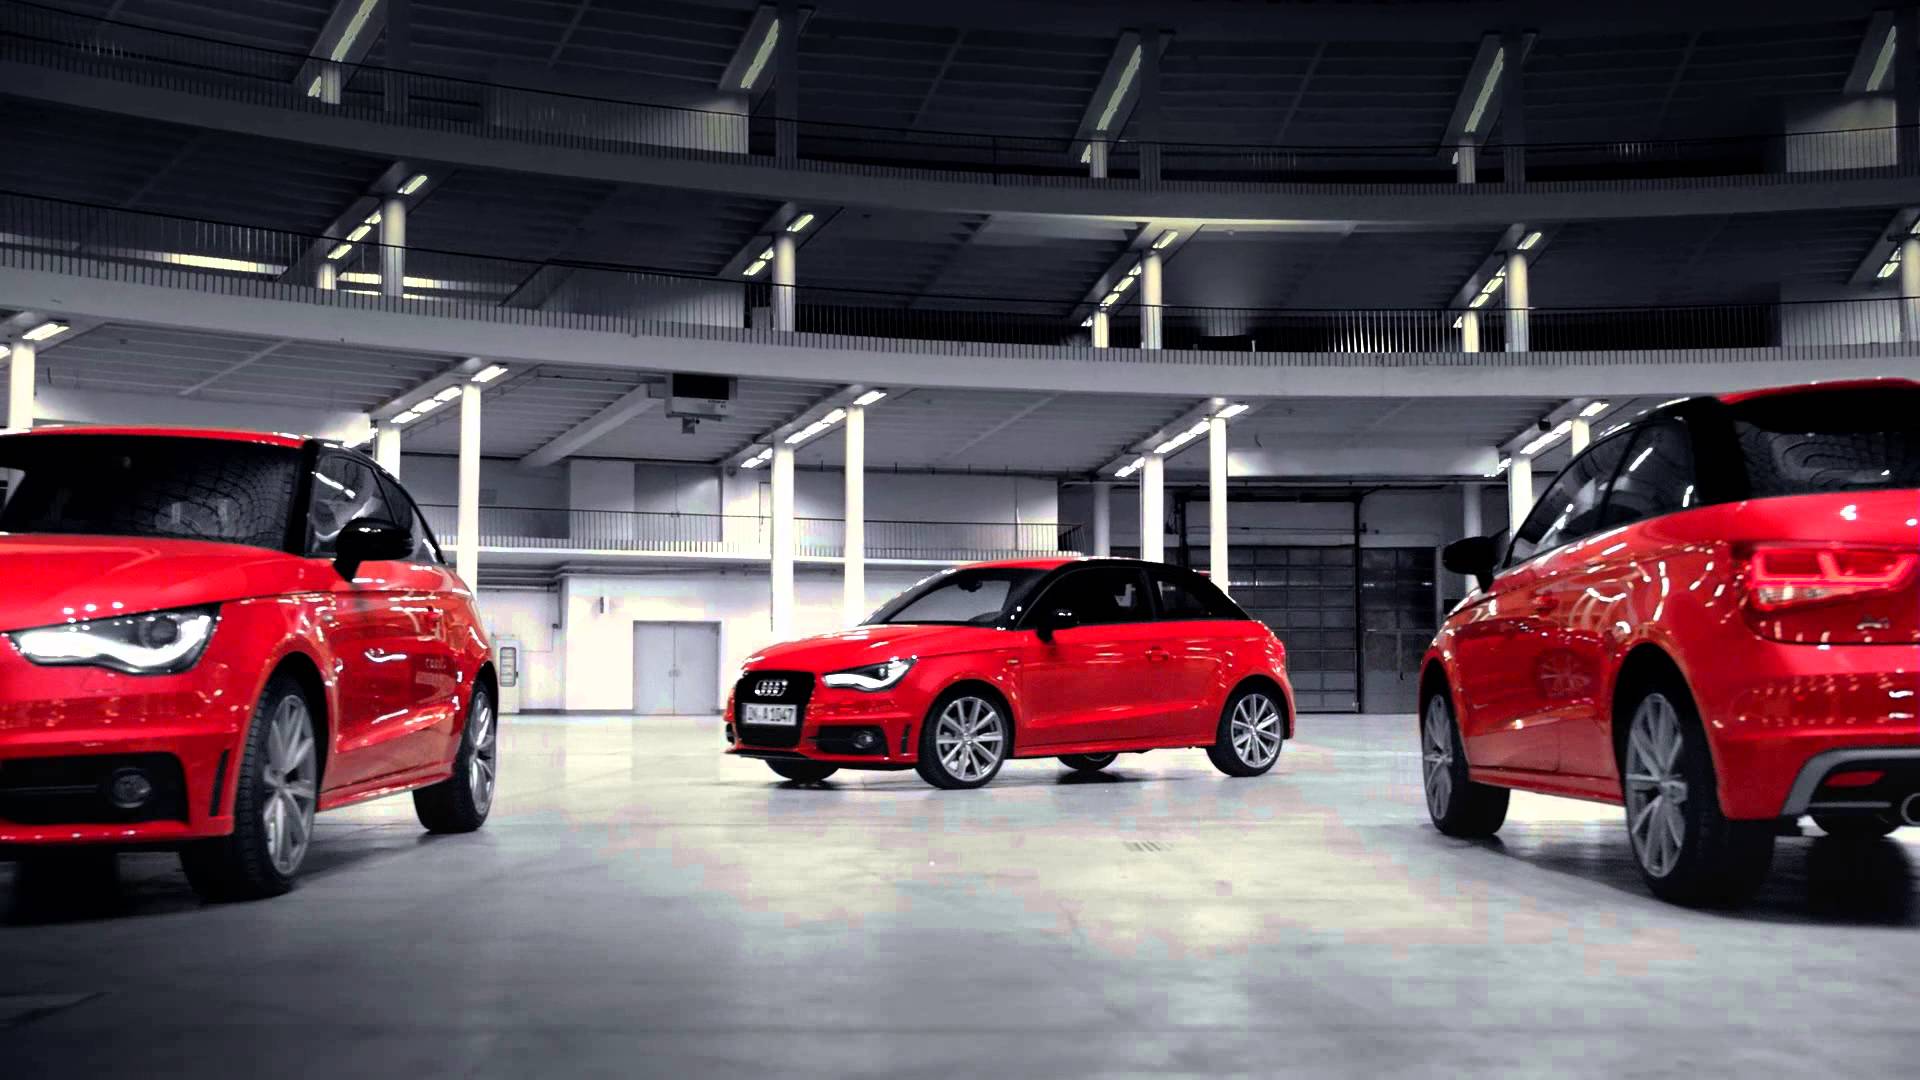 Audi A1 admired - YouTube